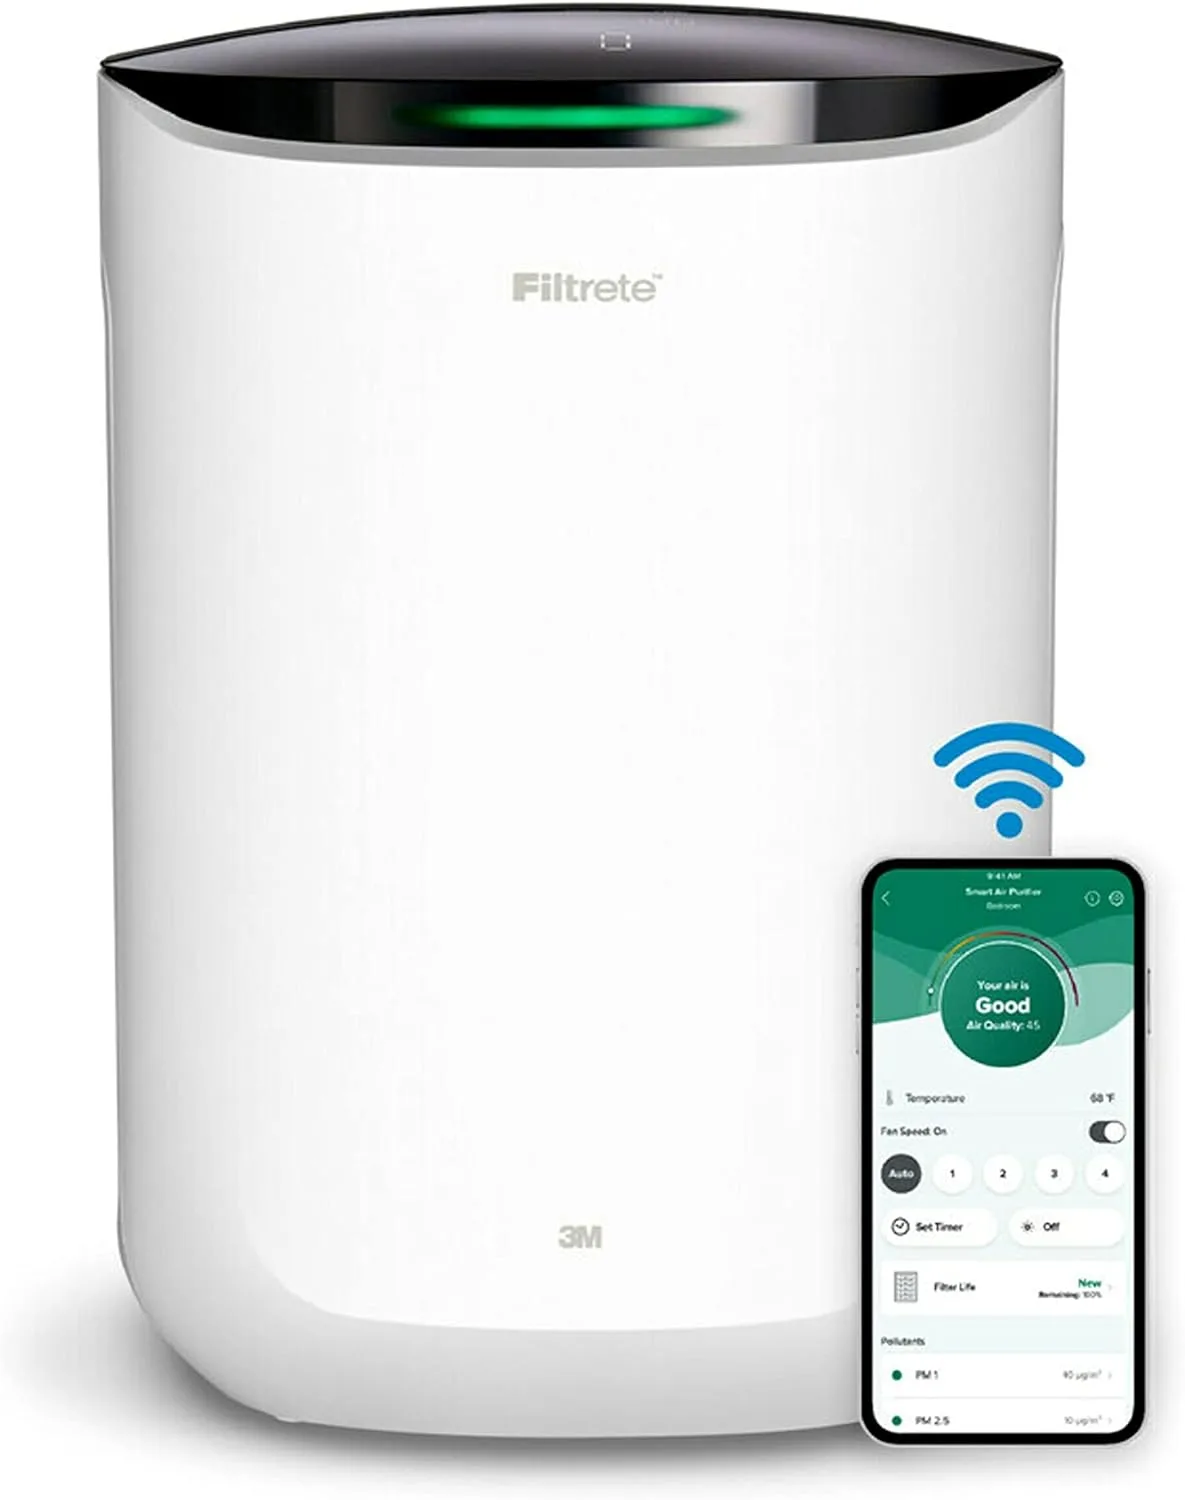 filtrete smart air purifier review jpg